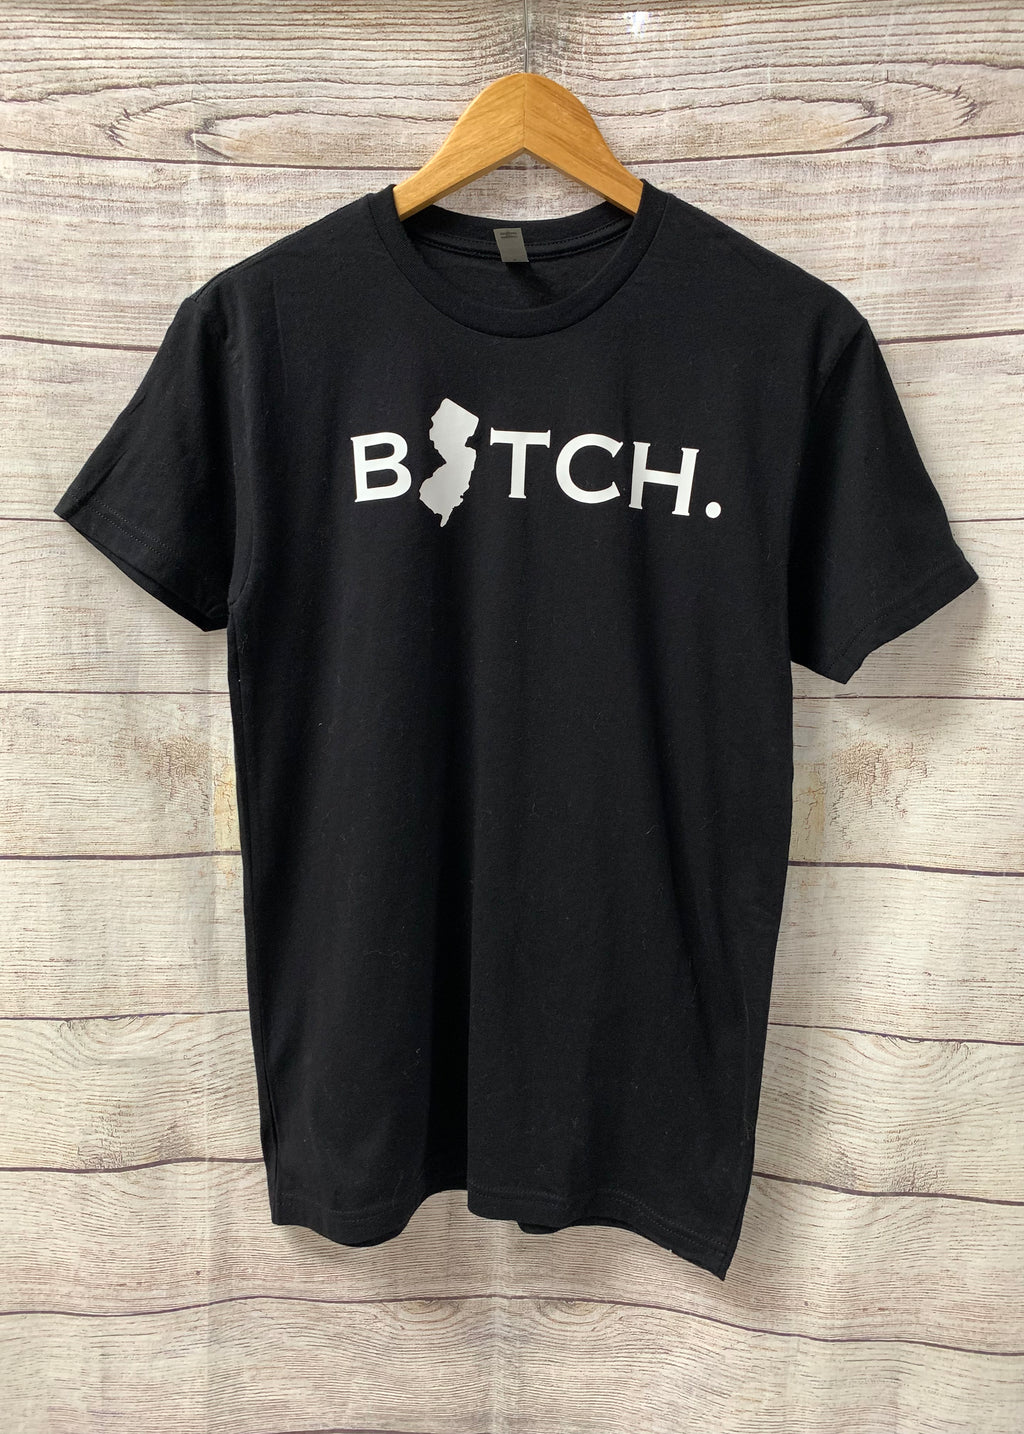 B*tch T-Shirt